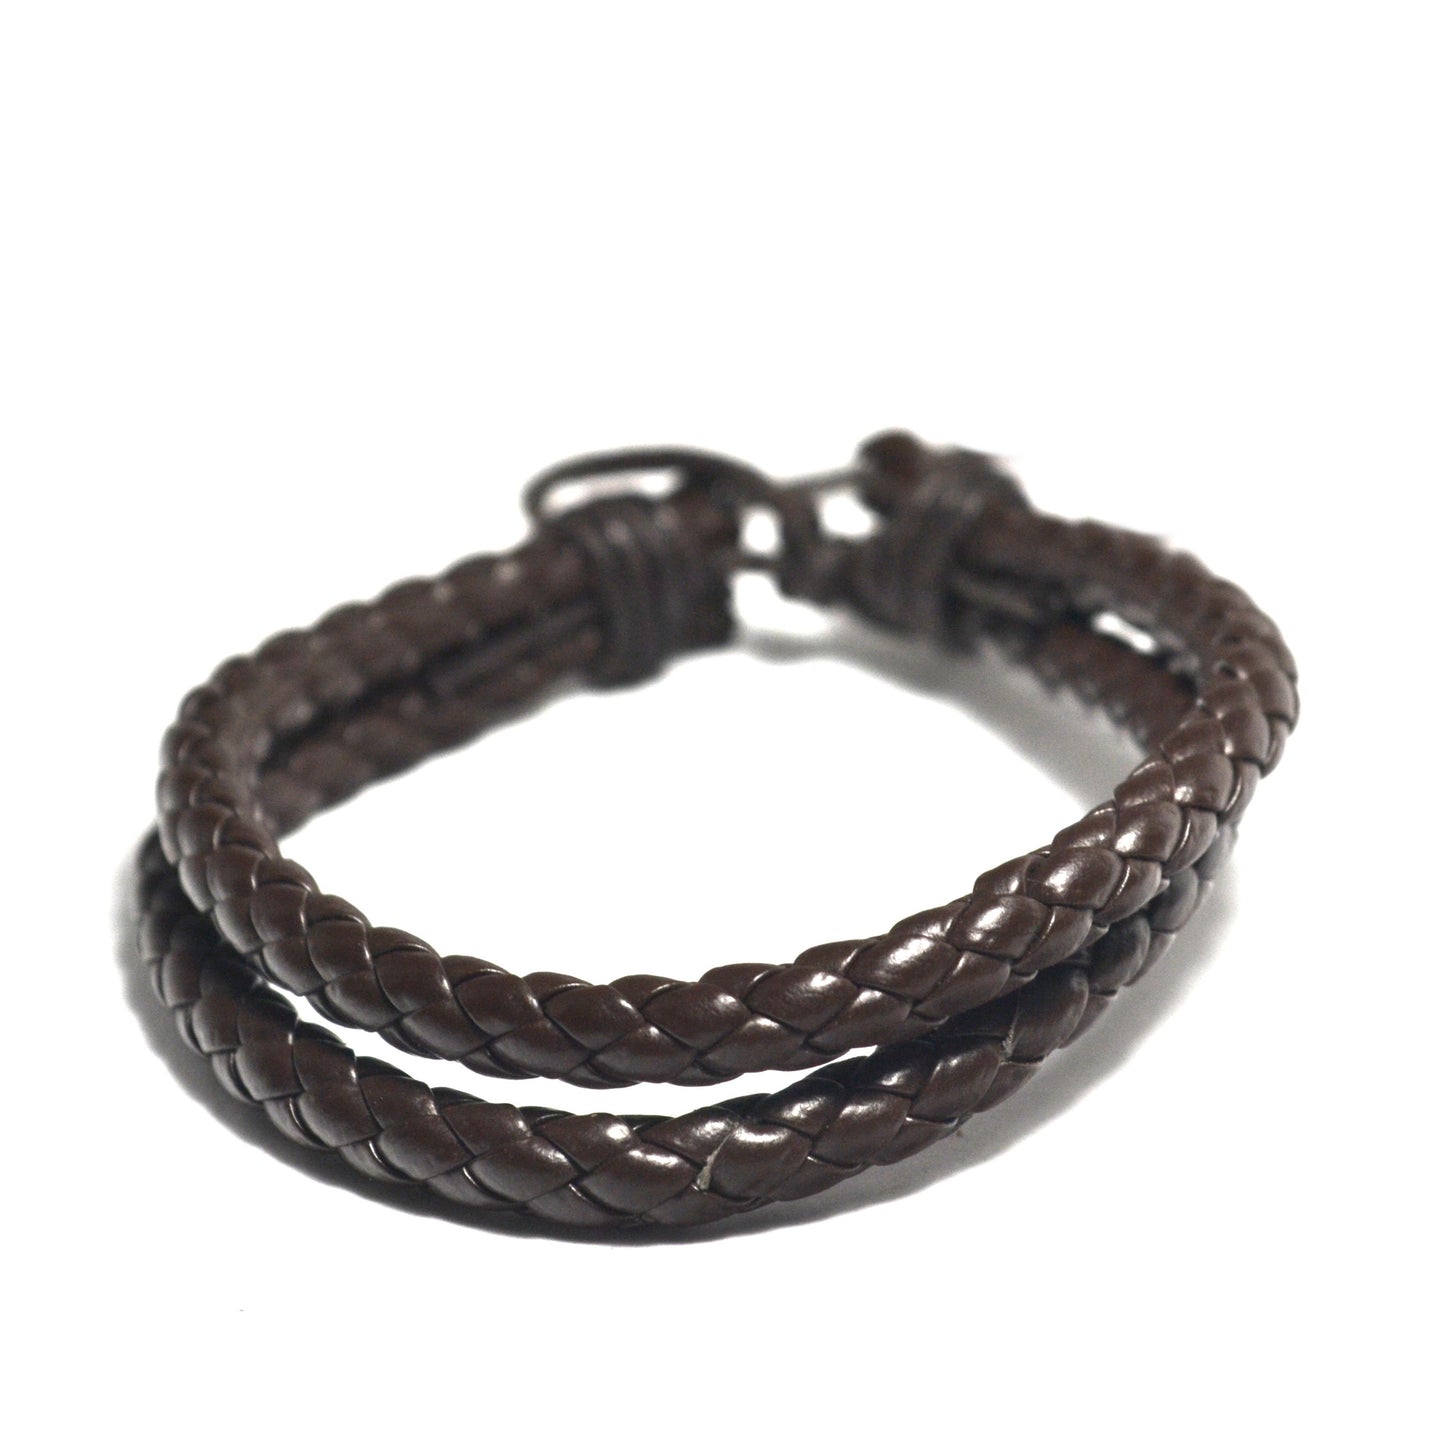 Double Braid Leather Bracelet